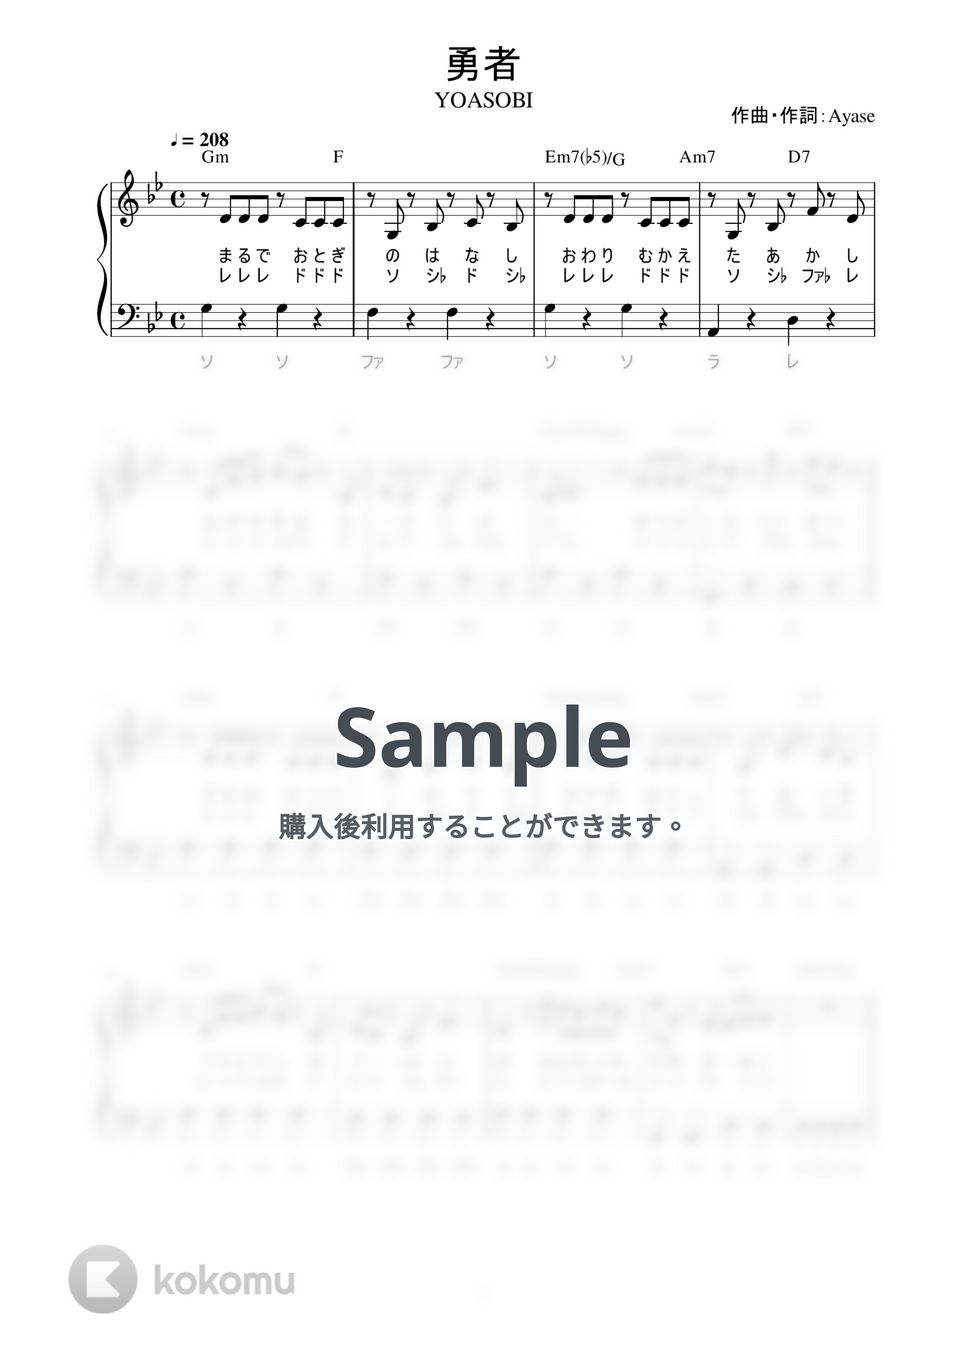 YOASOBI - 勇者 (かんたん / 歌詞付き / ドレミ付き / 初心者) by piano.tokyo